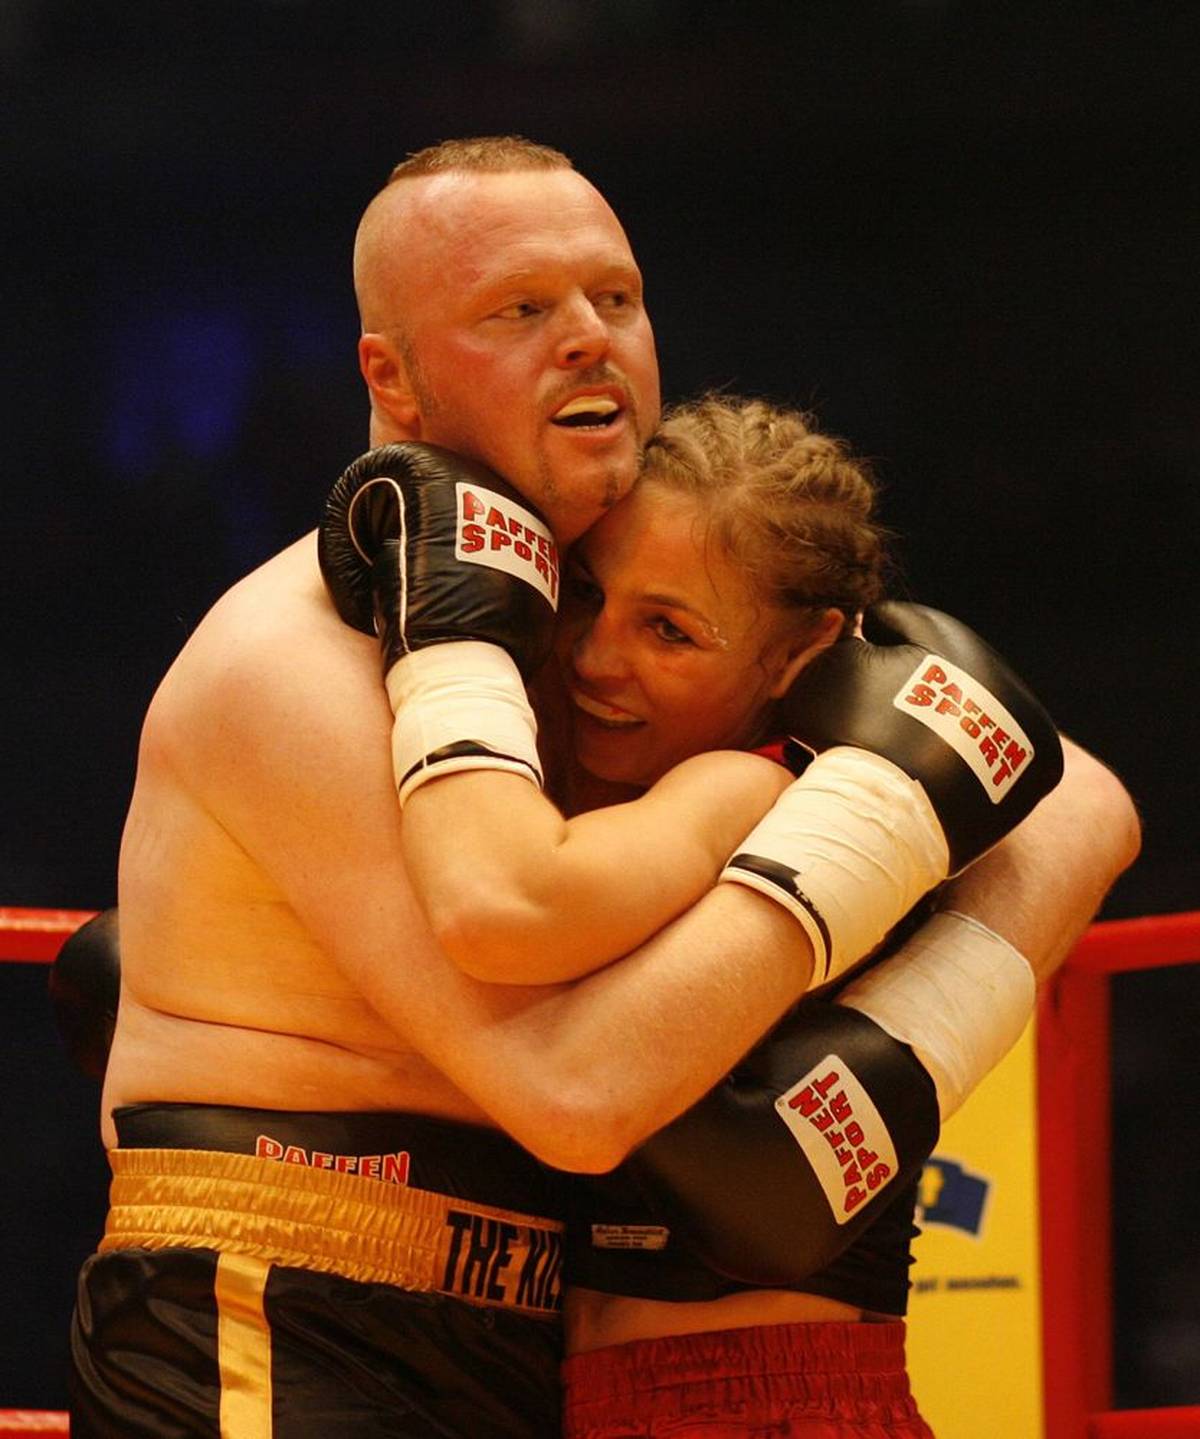 Stefan Raab και Regina Halmich στον δεύτερο αγώνα πυγμαχίας τους στην Κολωνία το 2007